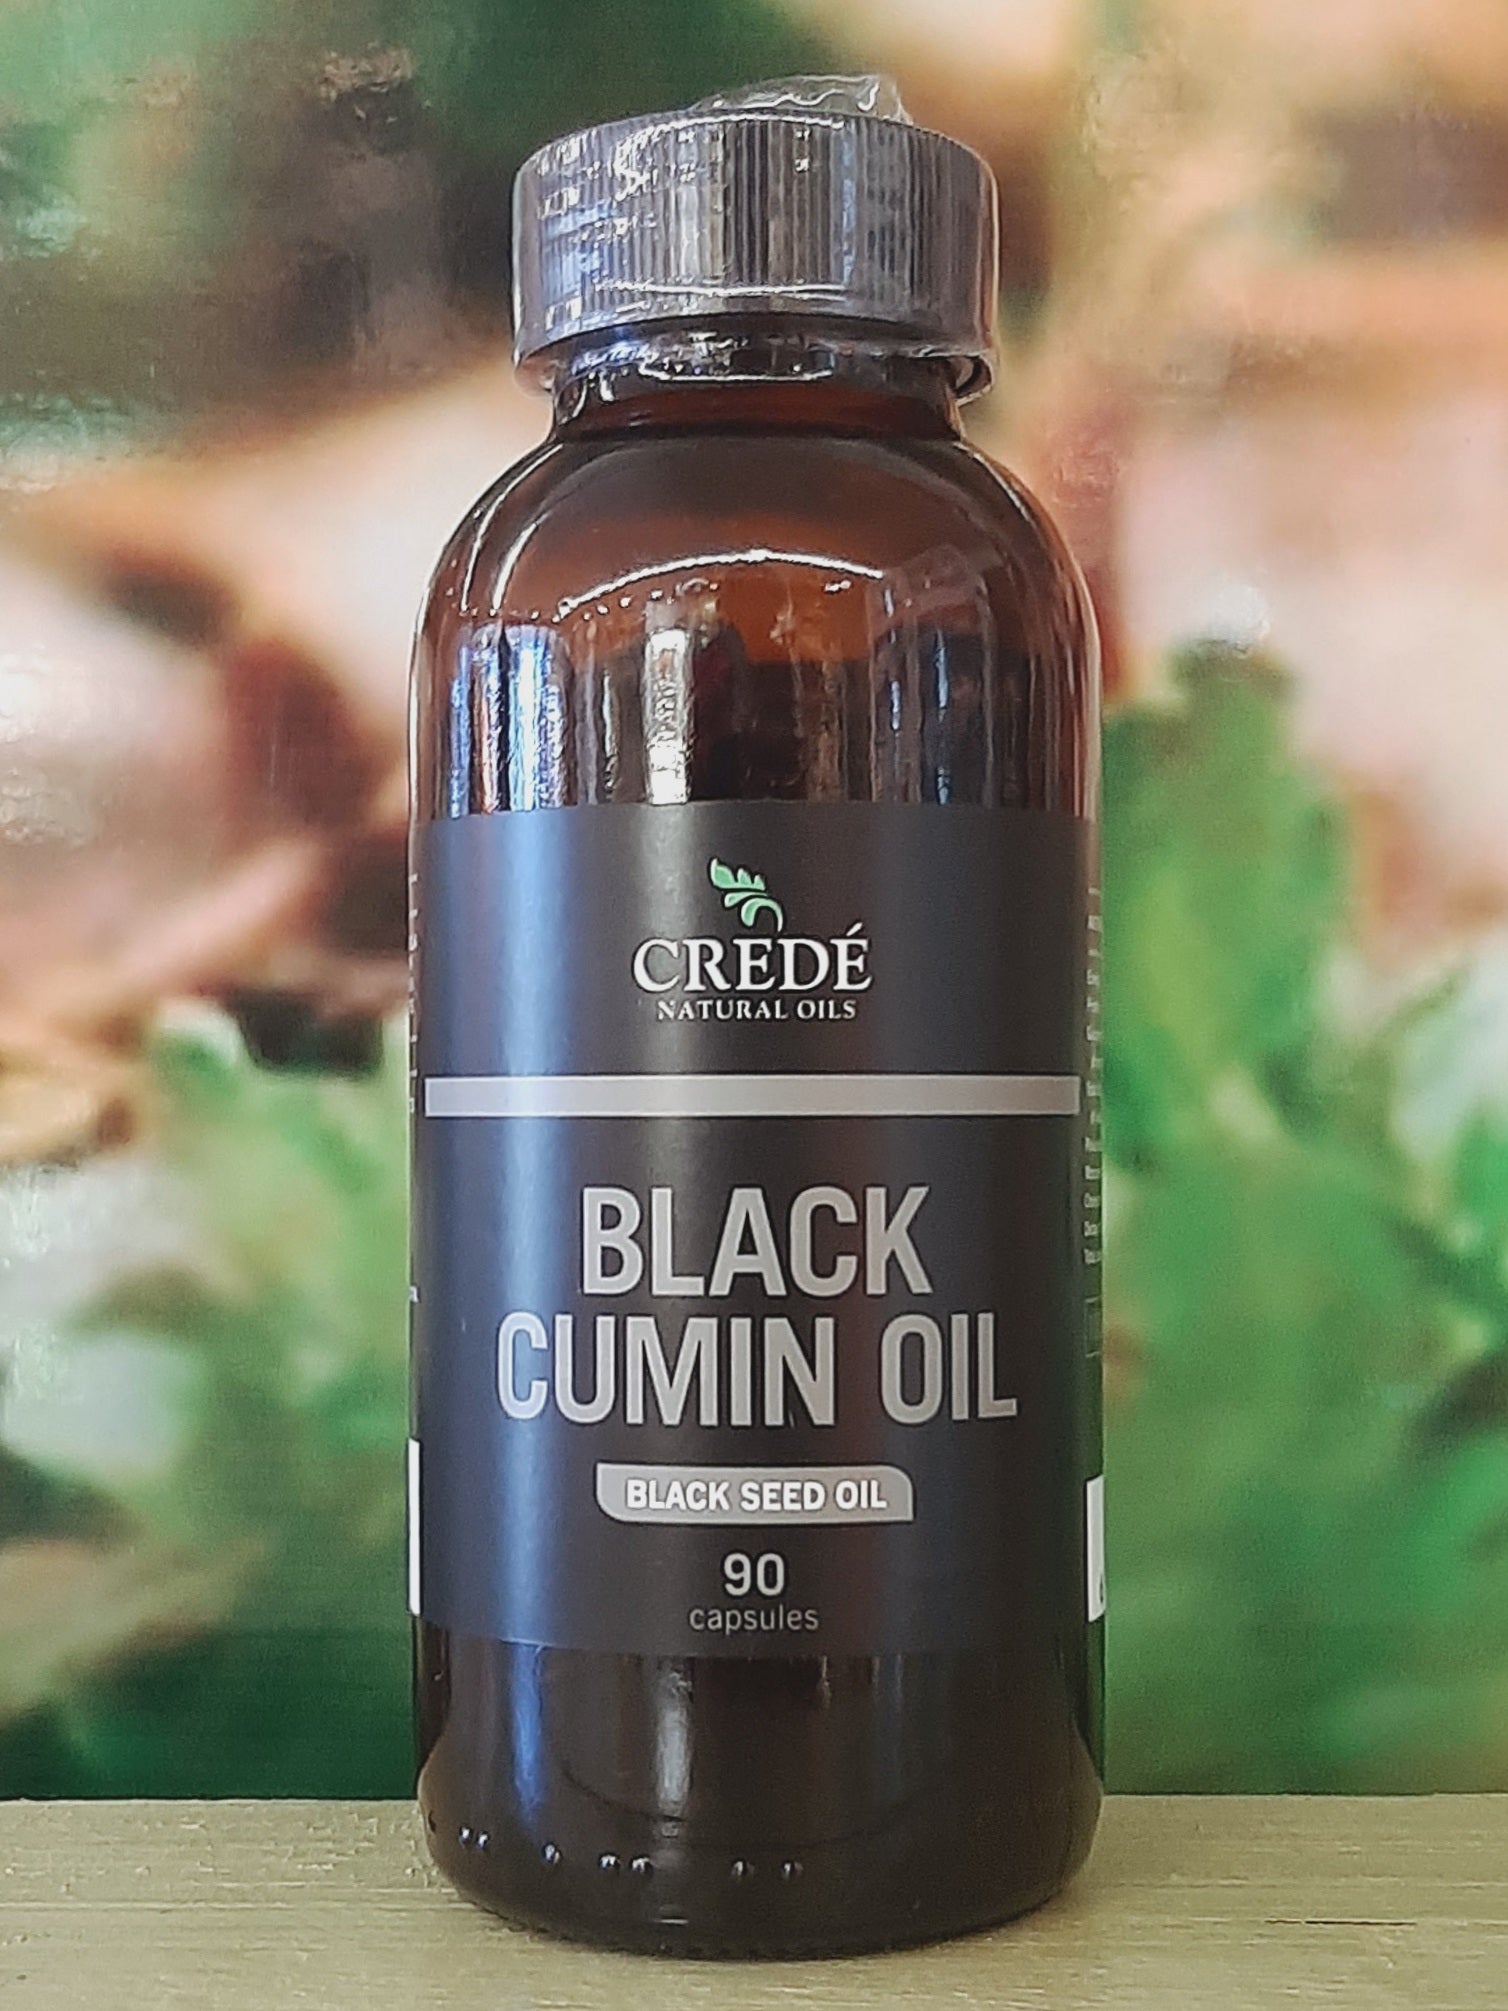 Crede Black Cumin Oil 90 capsules